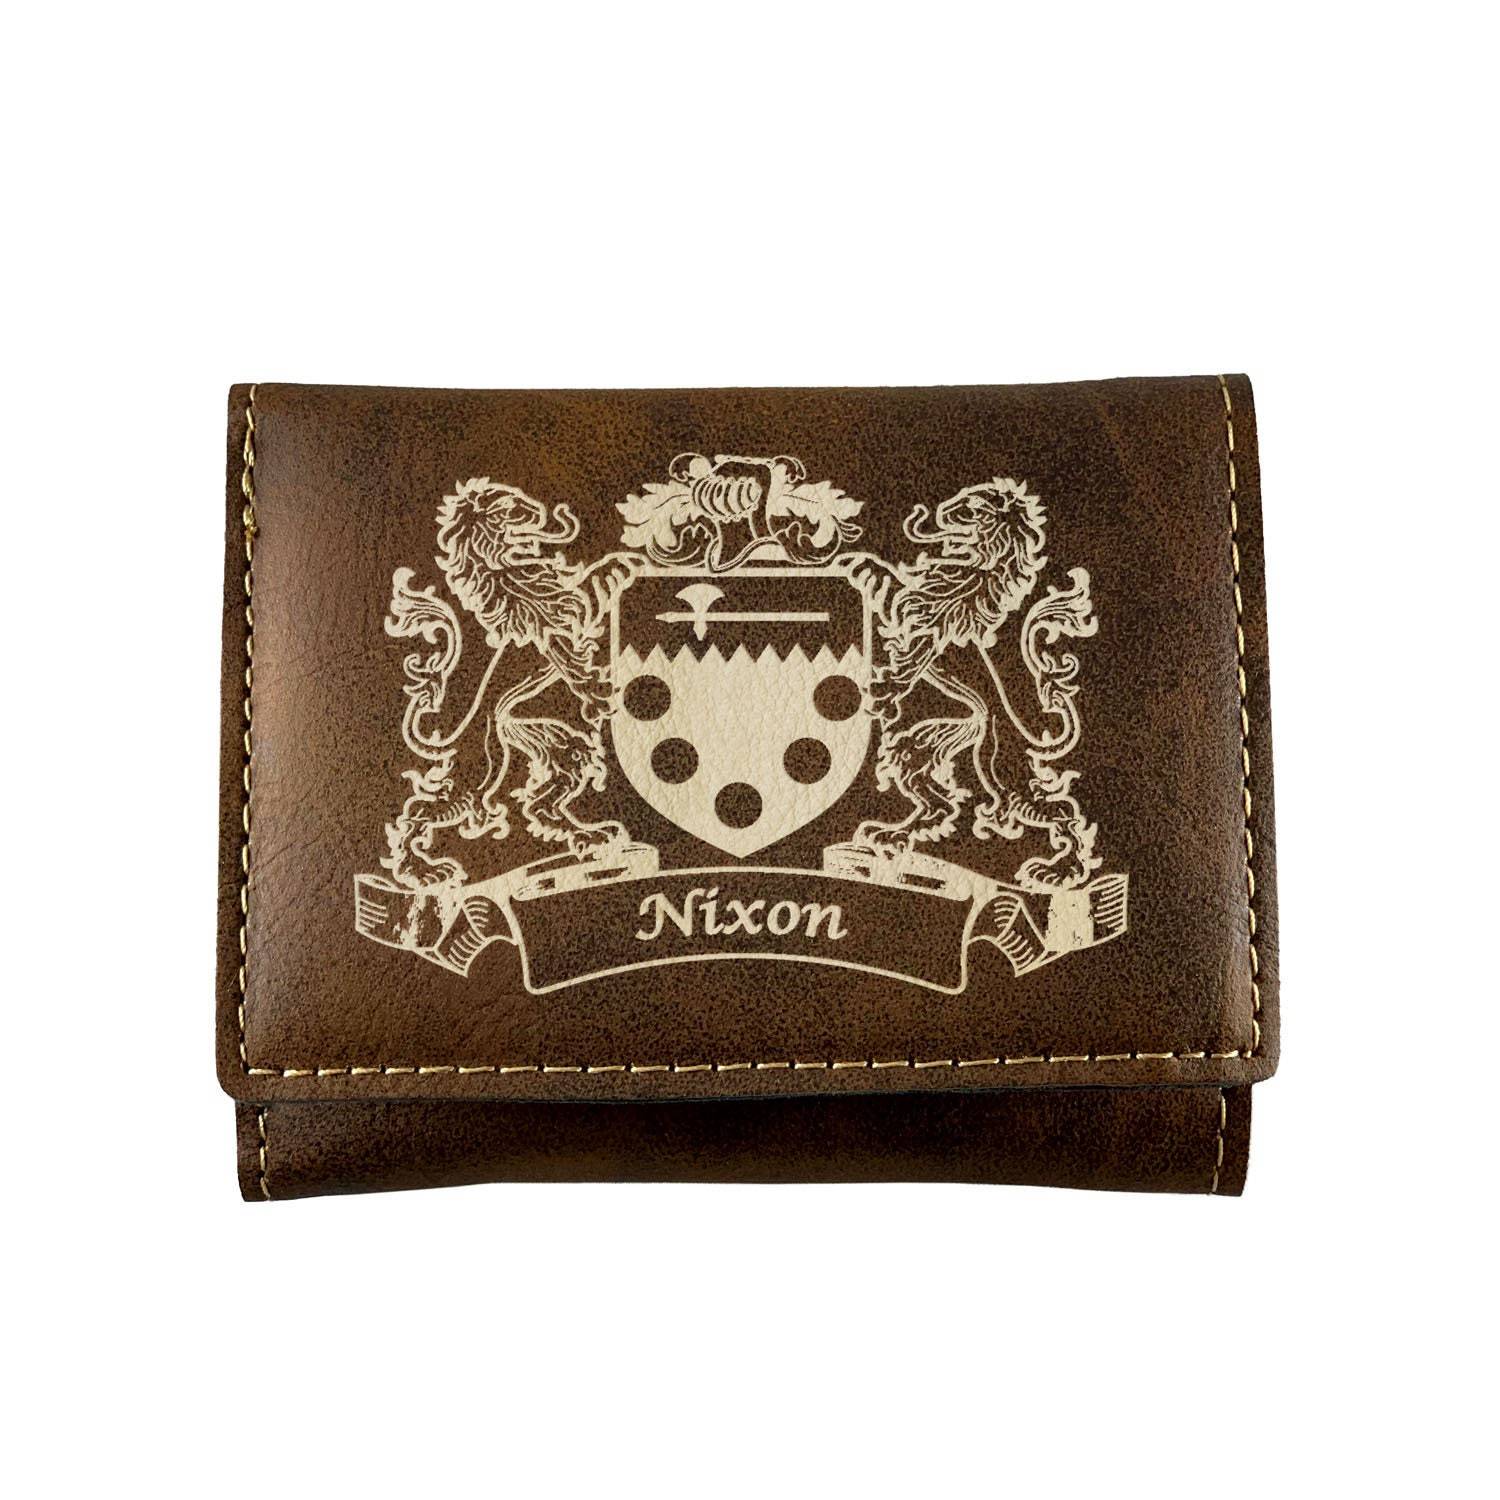 Nixon Irish Coat of Arms Rustic Leather Wallet